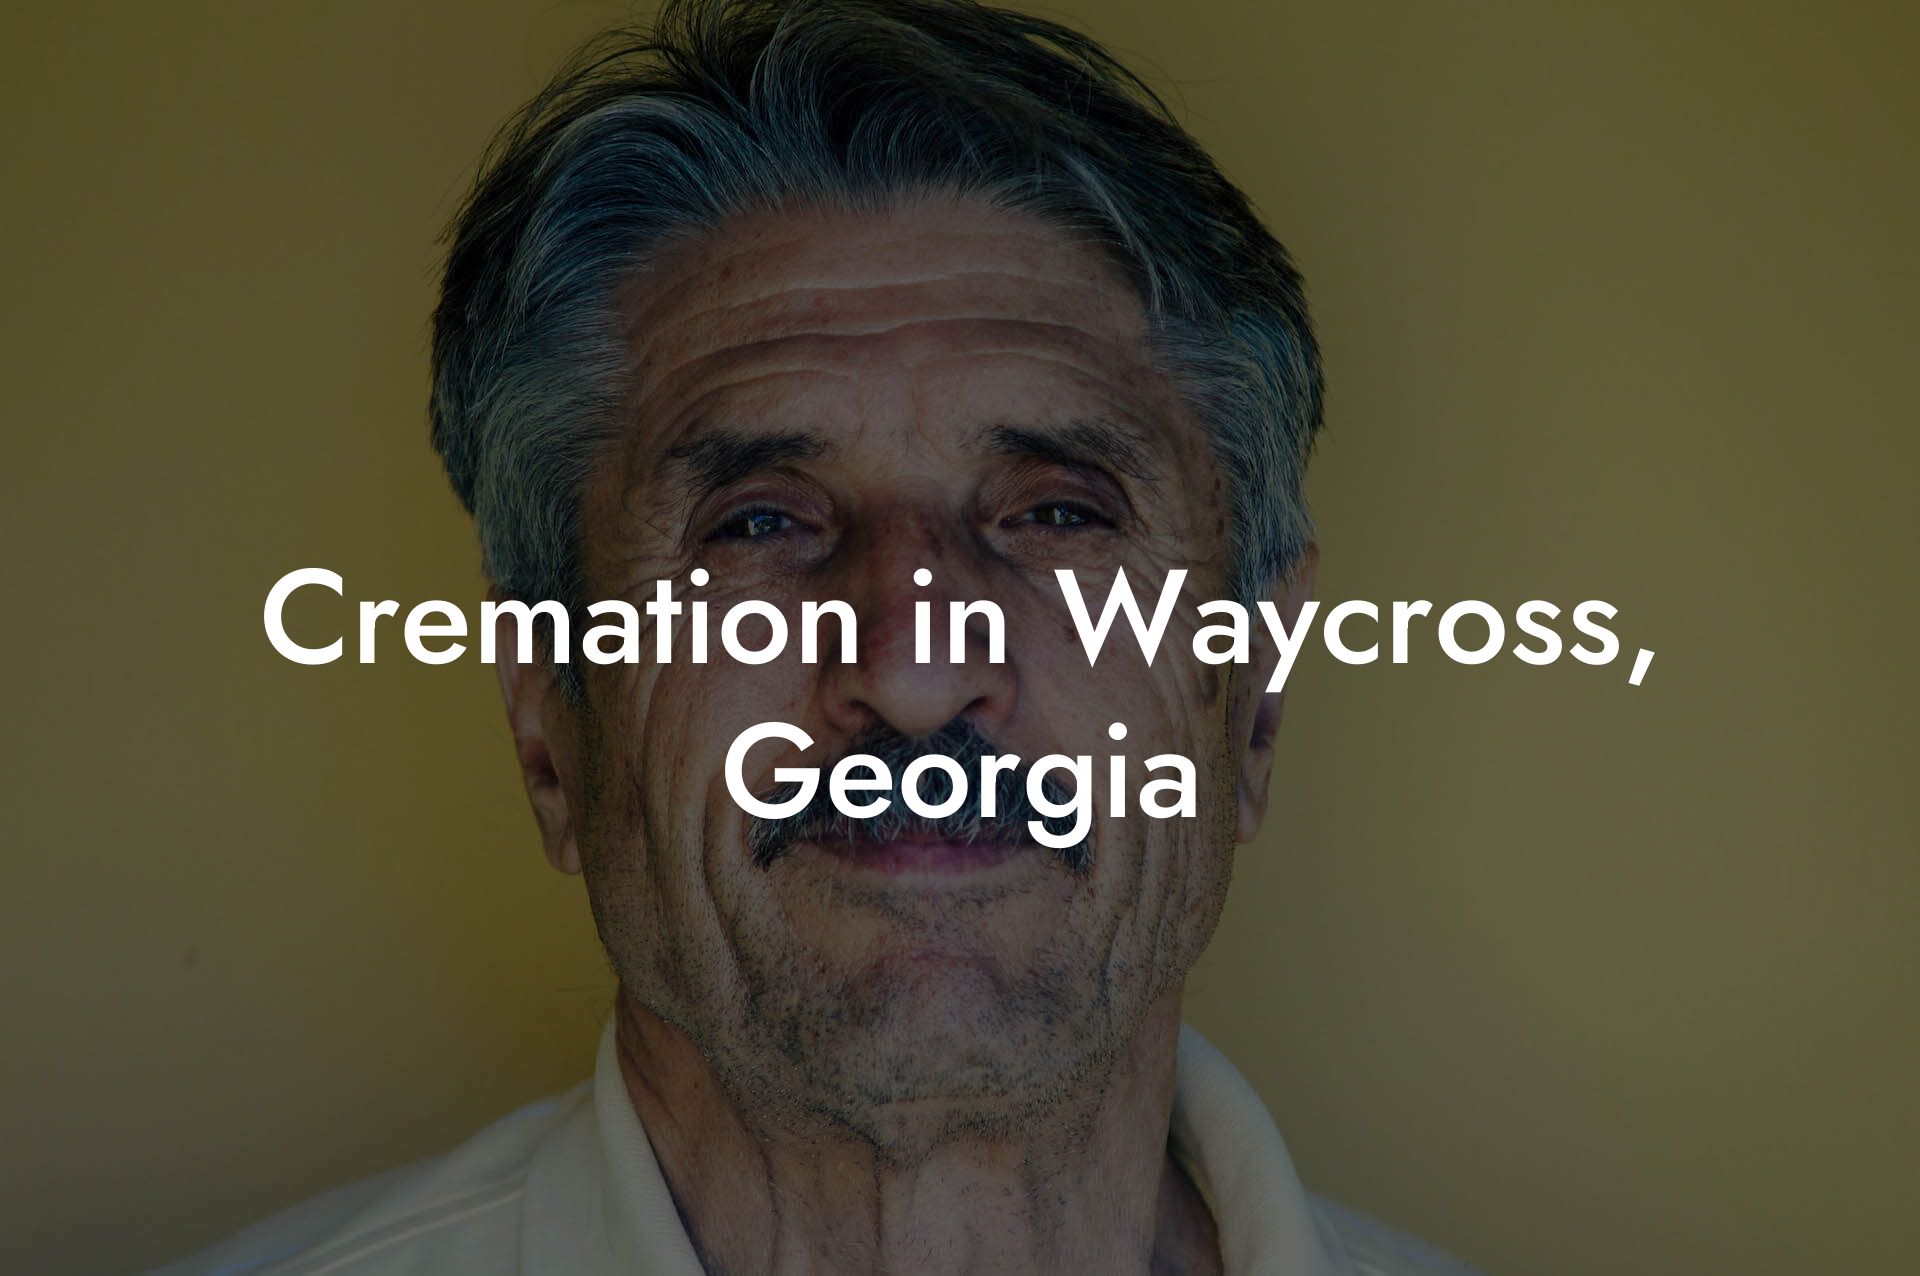 Cremation in Waycross, Georgia